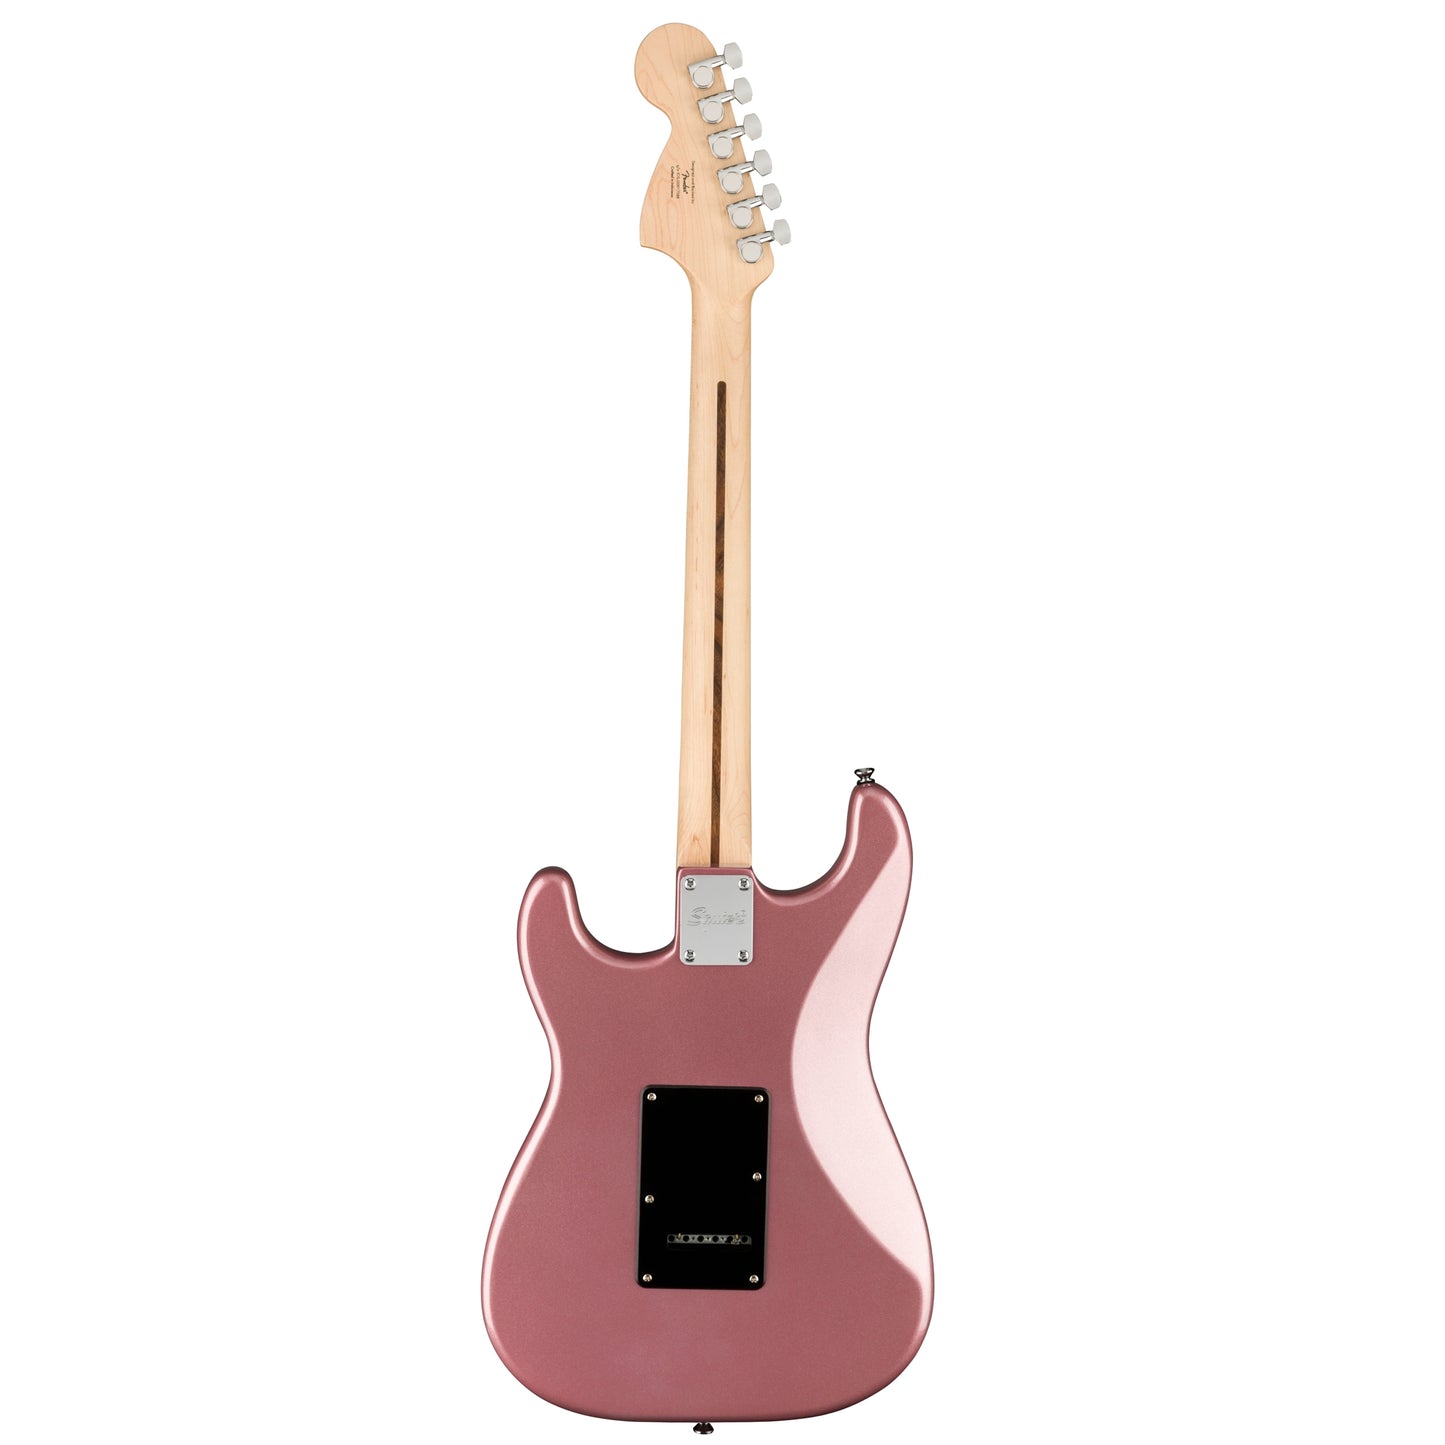 Squier Affinity Series HH Stratocaster Electric Guitar, Laurel FB, Burgundy Mist